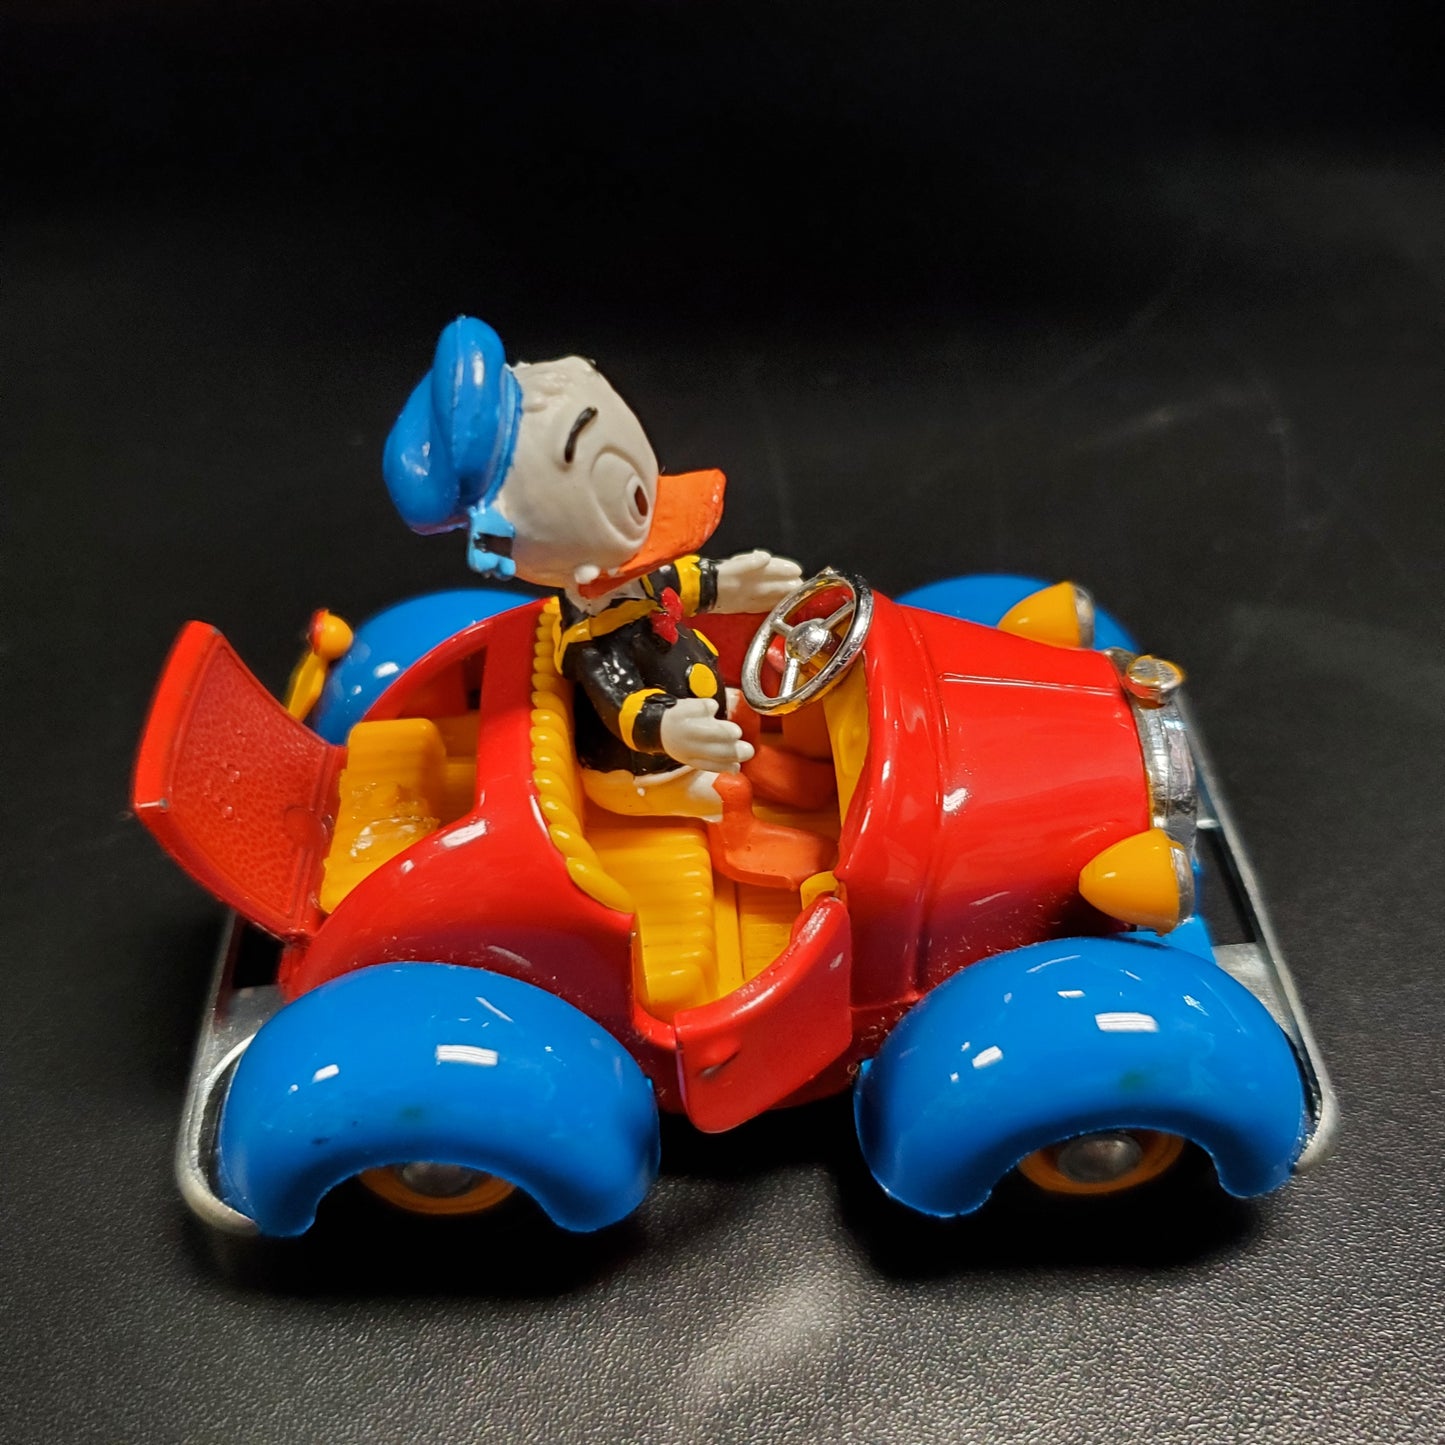 Vintage Politoys Paperino Donald Duck & Nephews 313 Toy Car #554 Italy